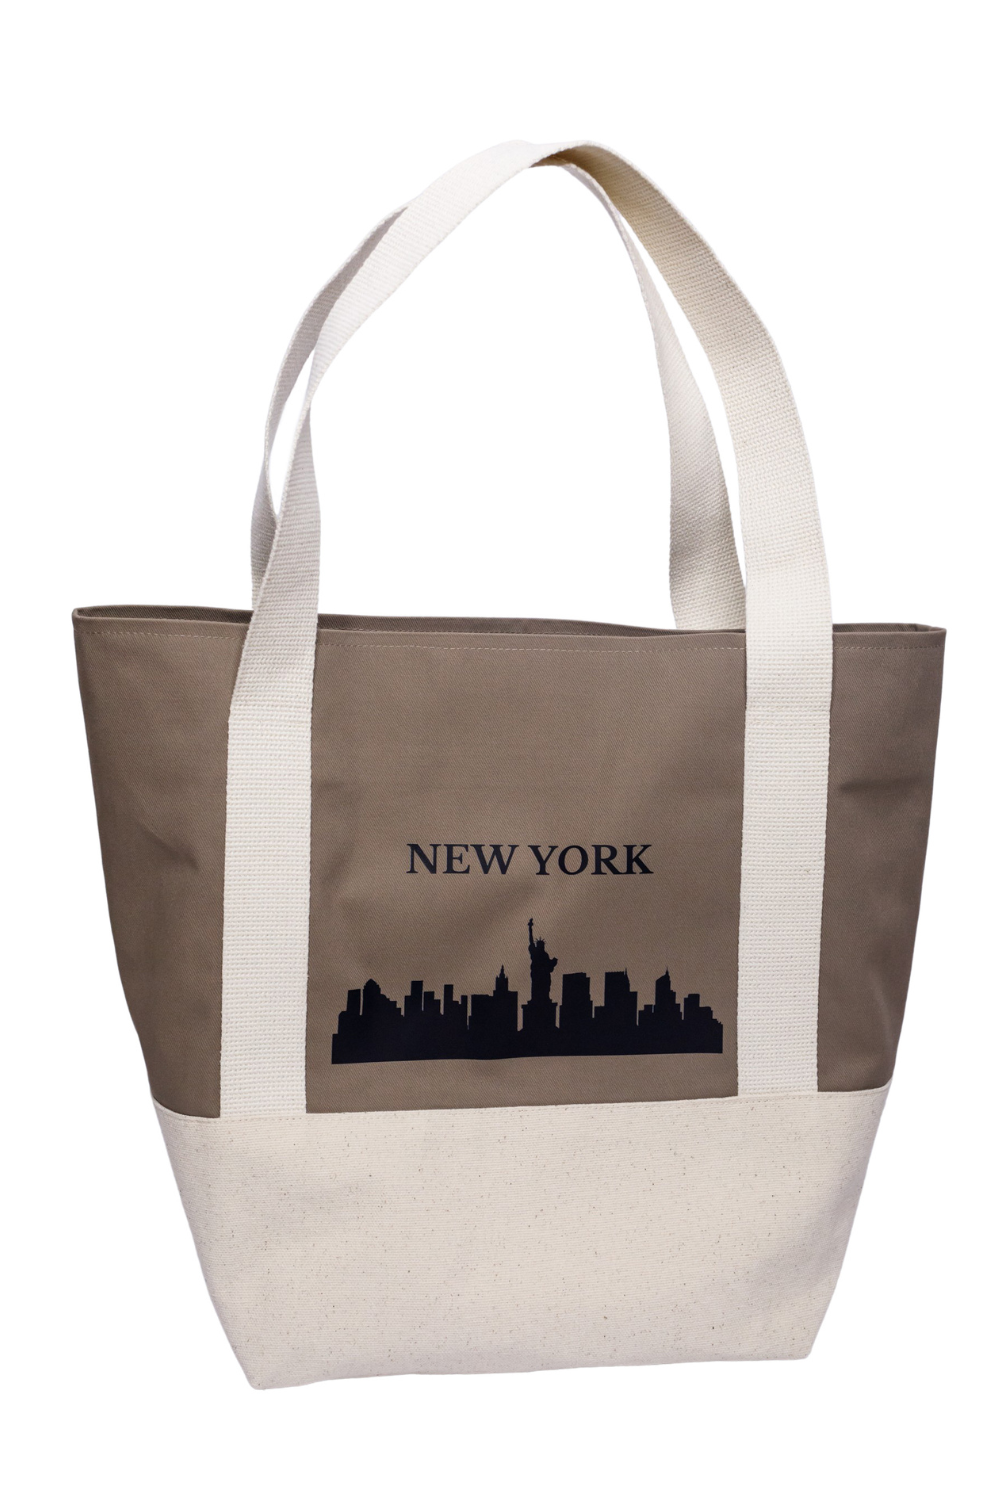 Cotton ecological shopping bag white New York 05S04